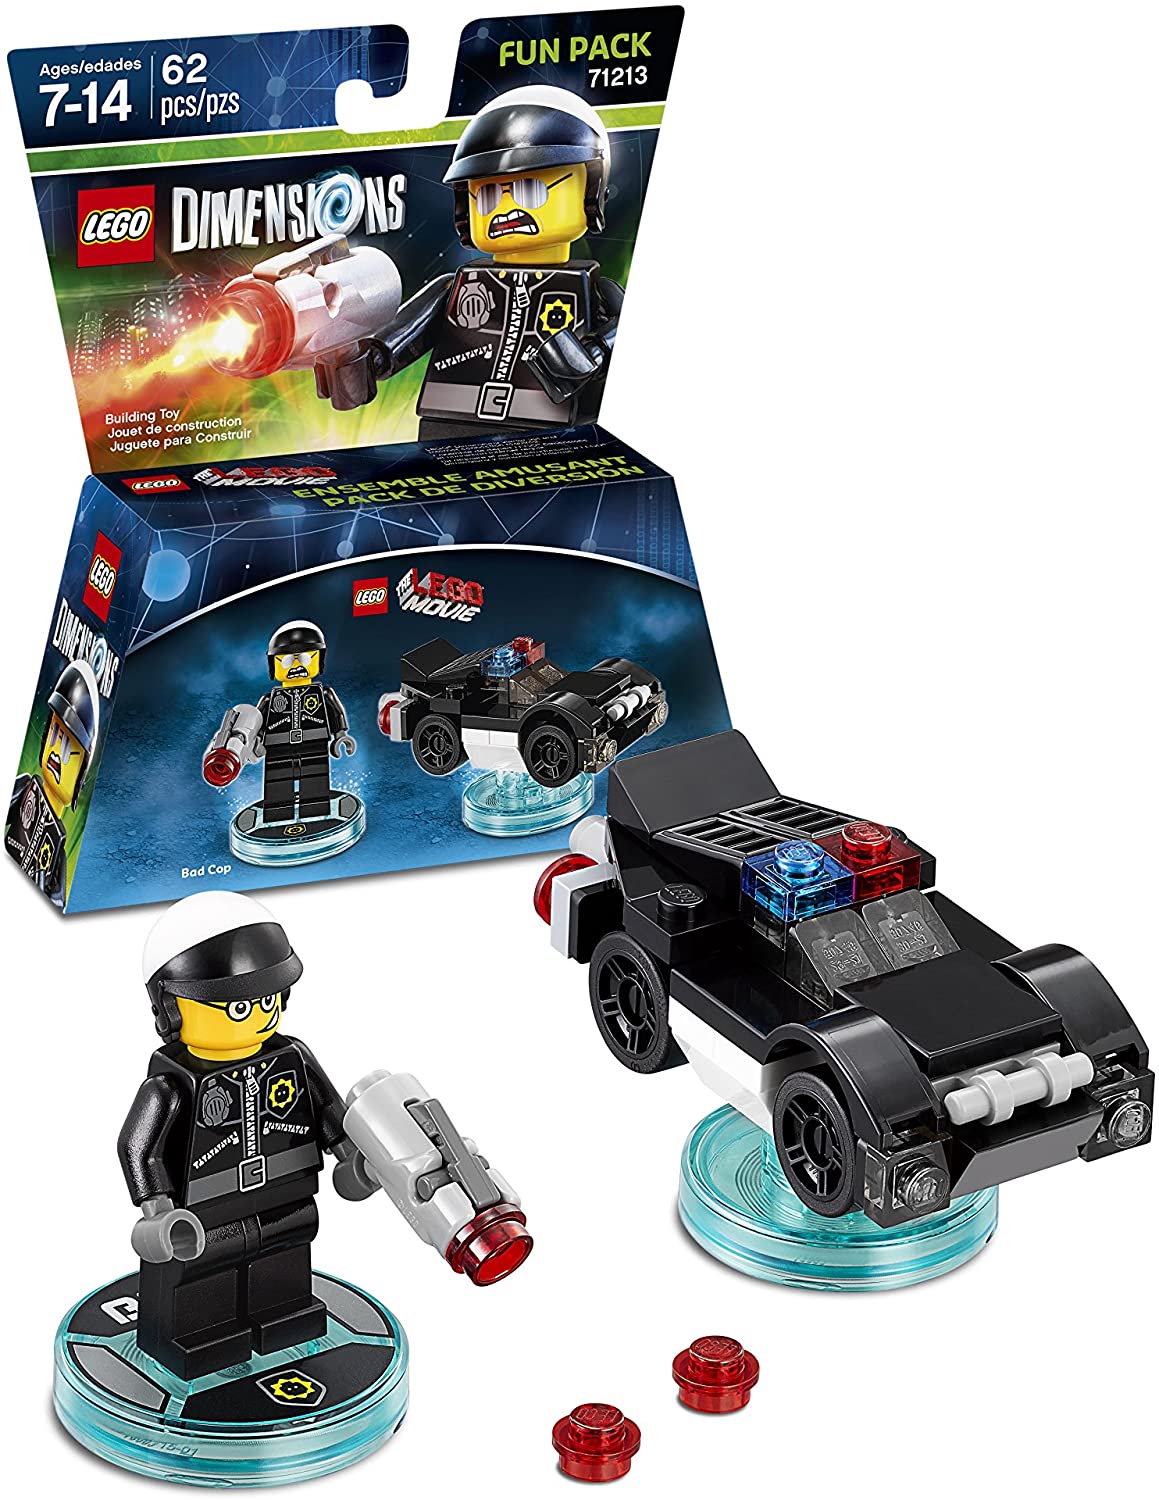 LEGO Dimensions - Fun Pack (71213)  - The LEGO Movie (Bad Cop, Police Car)